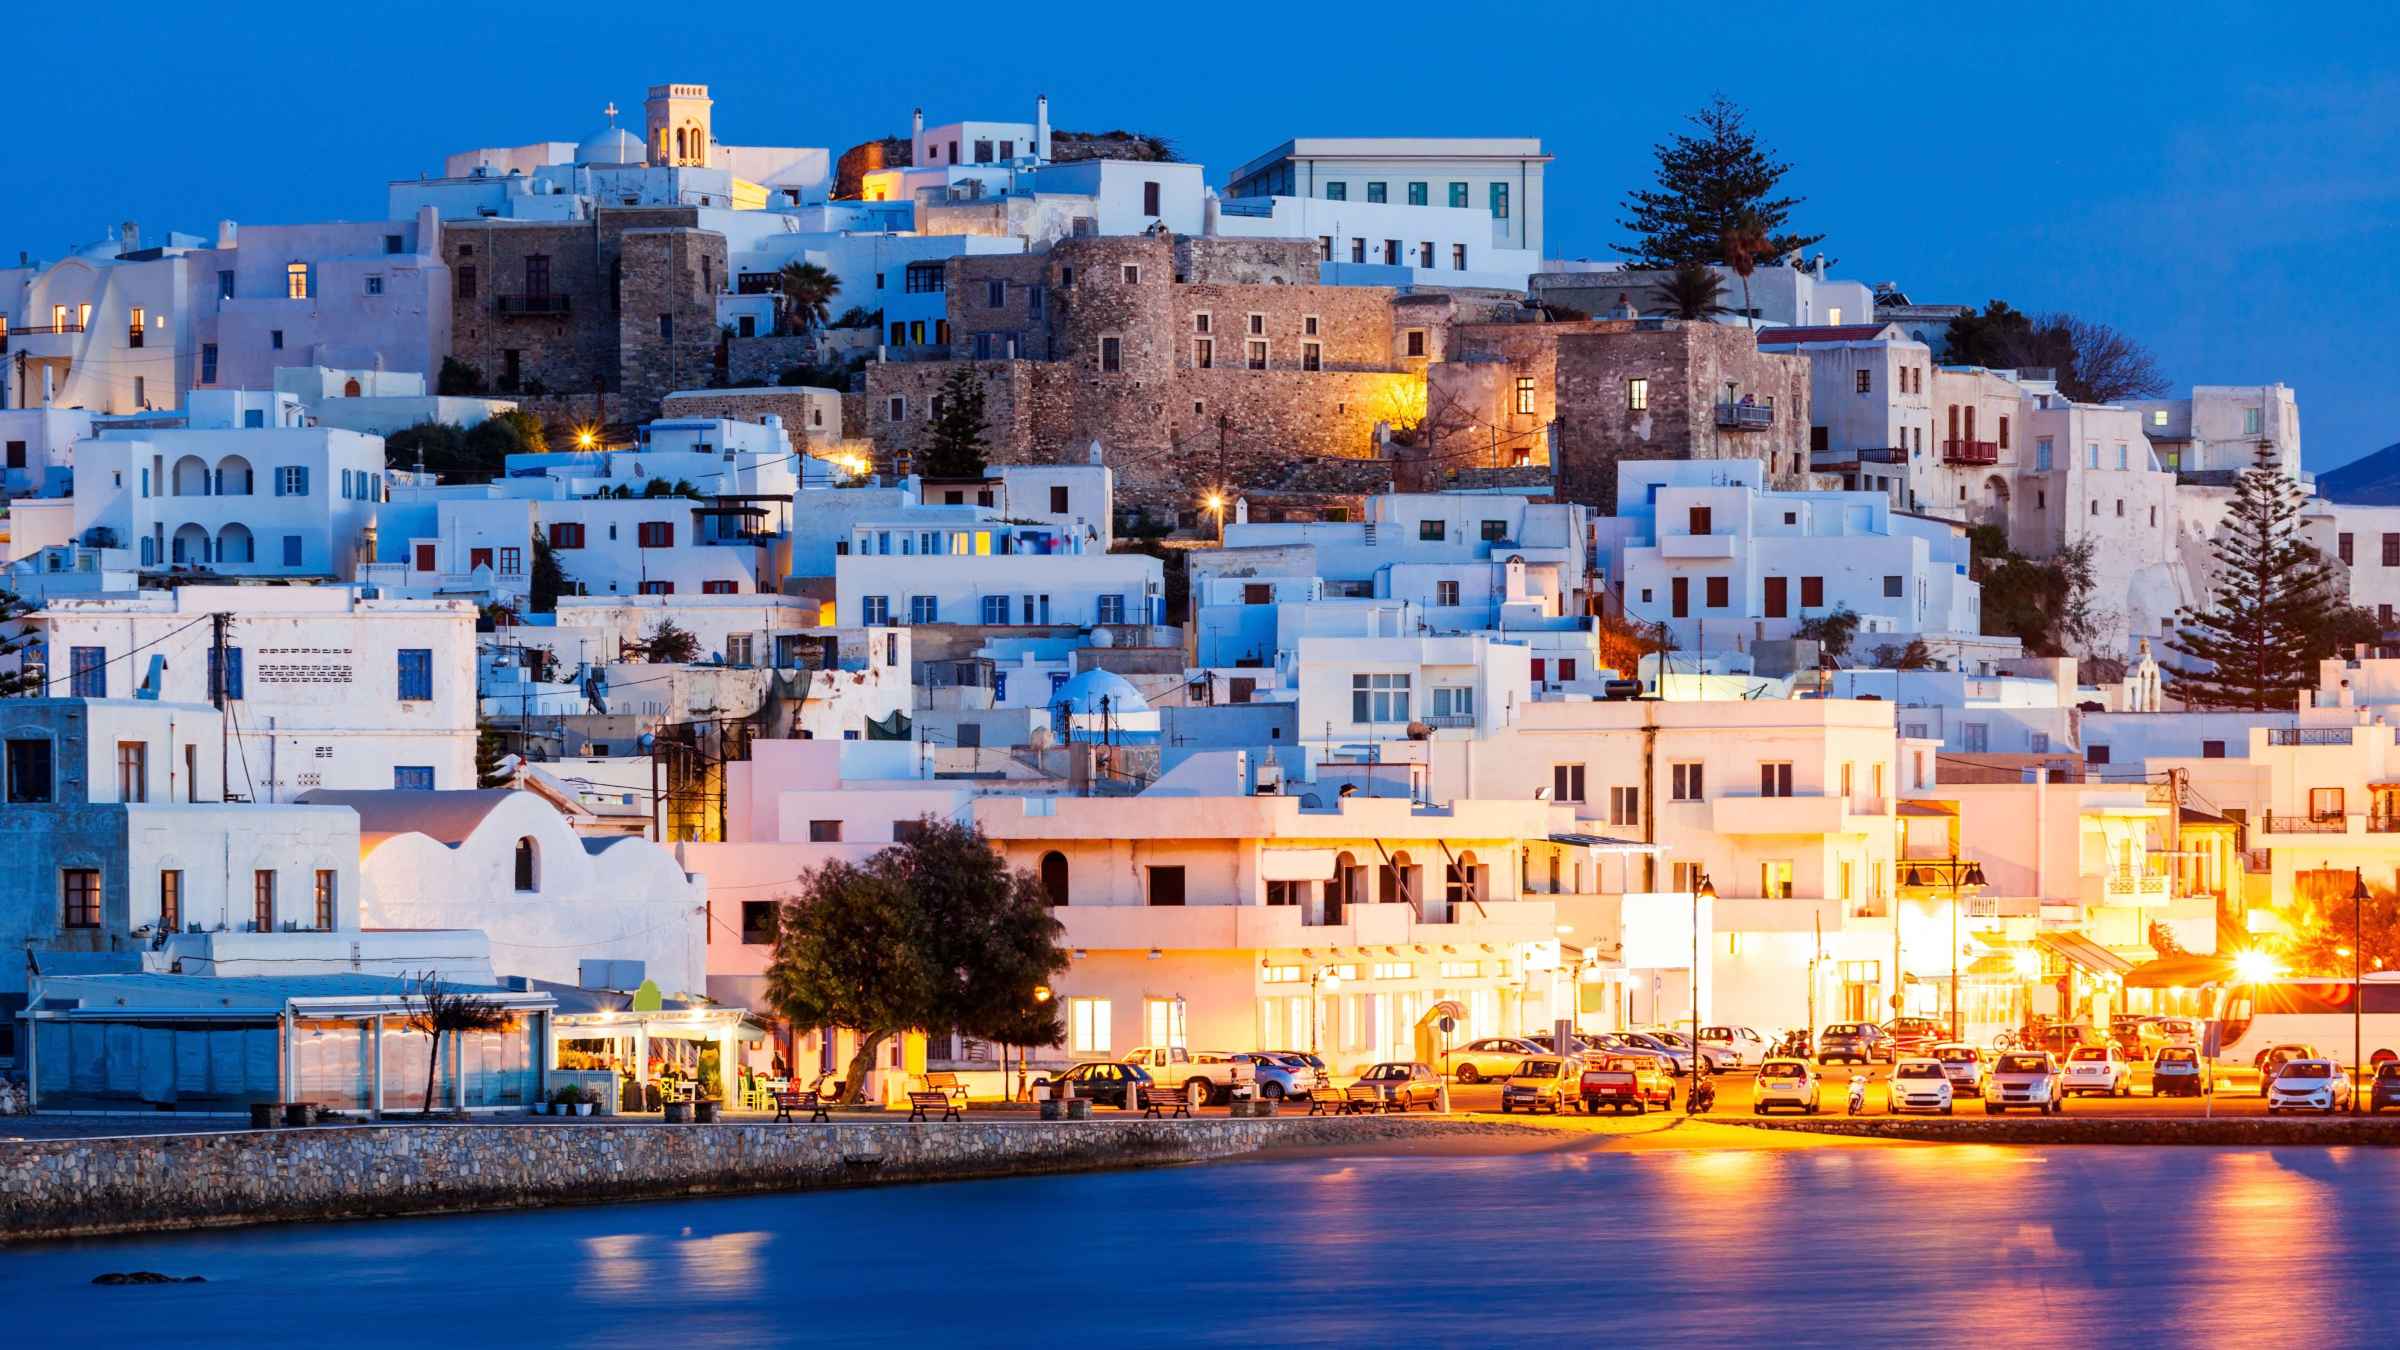 naxos tourism information